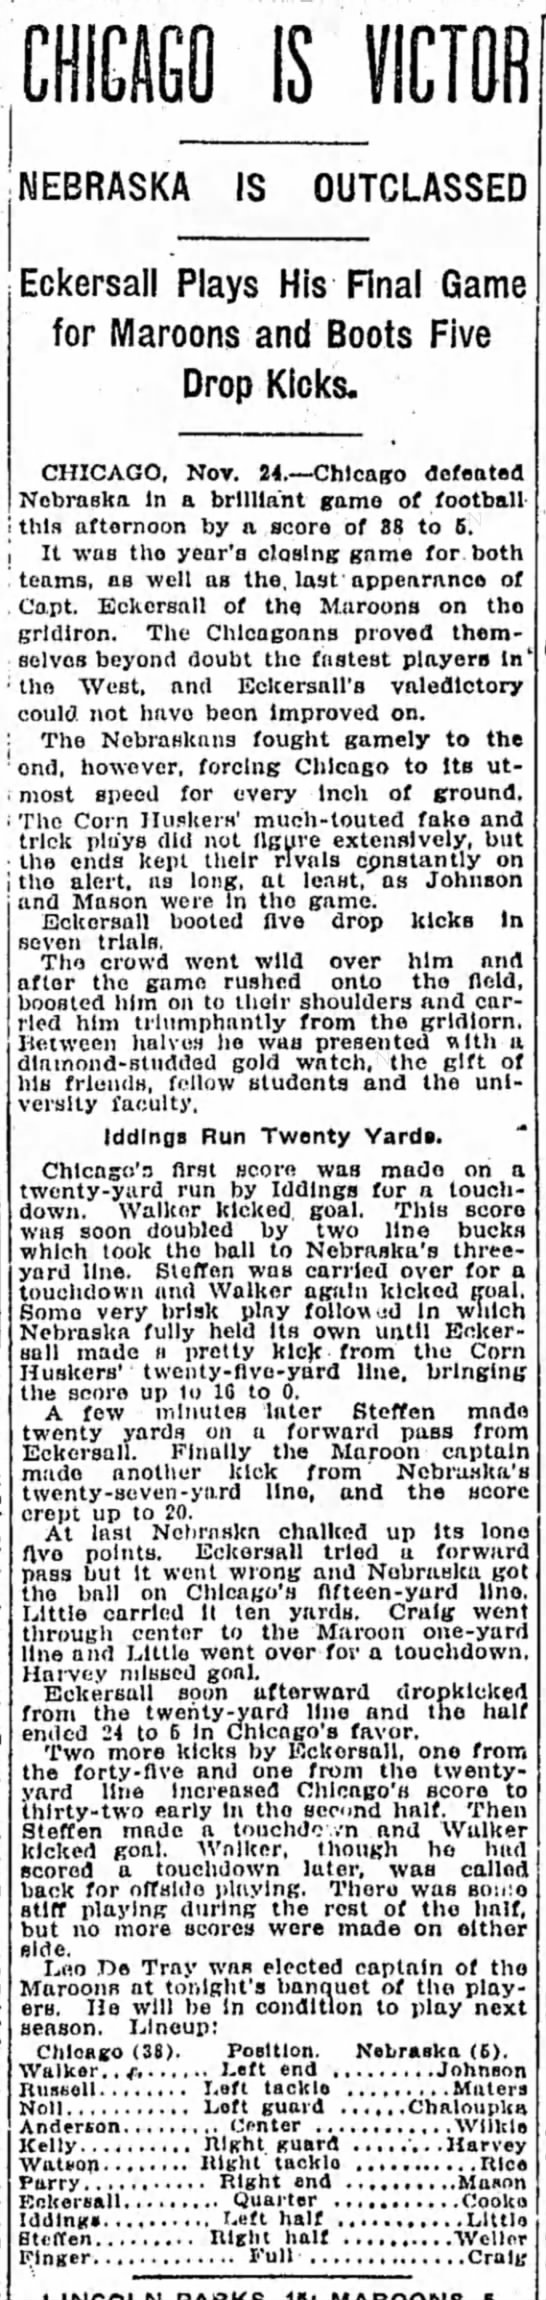 1906 Nebraska-Chicago football, Indianapolis Star - 